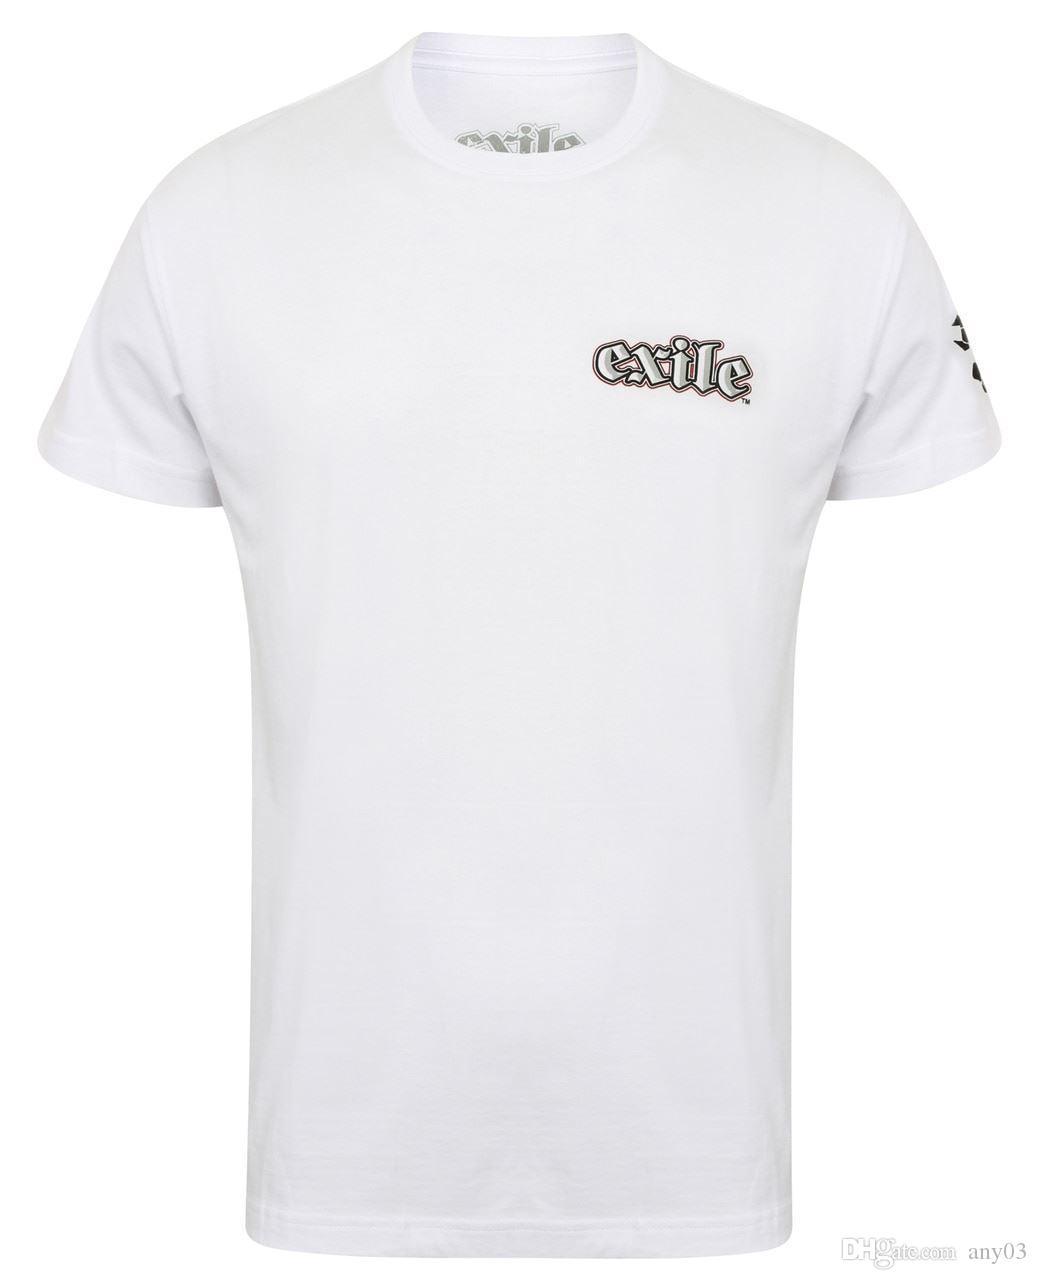 Exile Oval Logo - Oval Exile Logo T-Shirt (White)